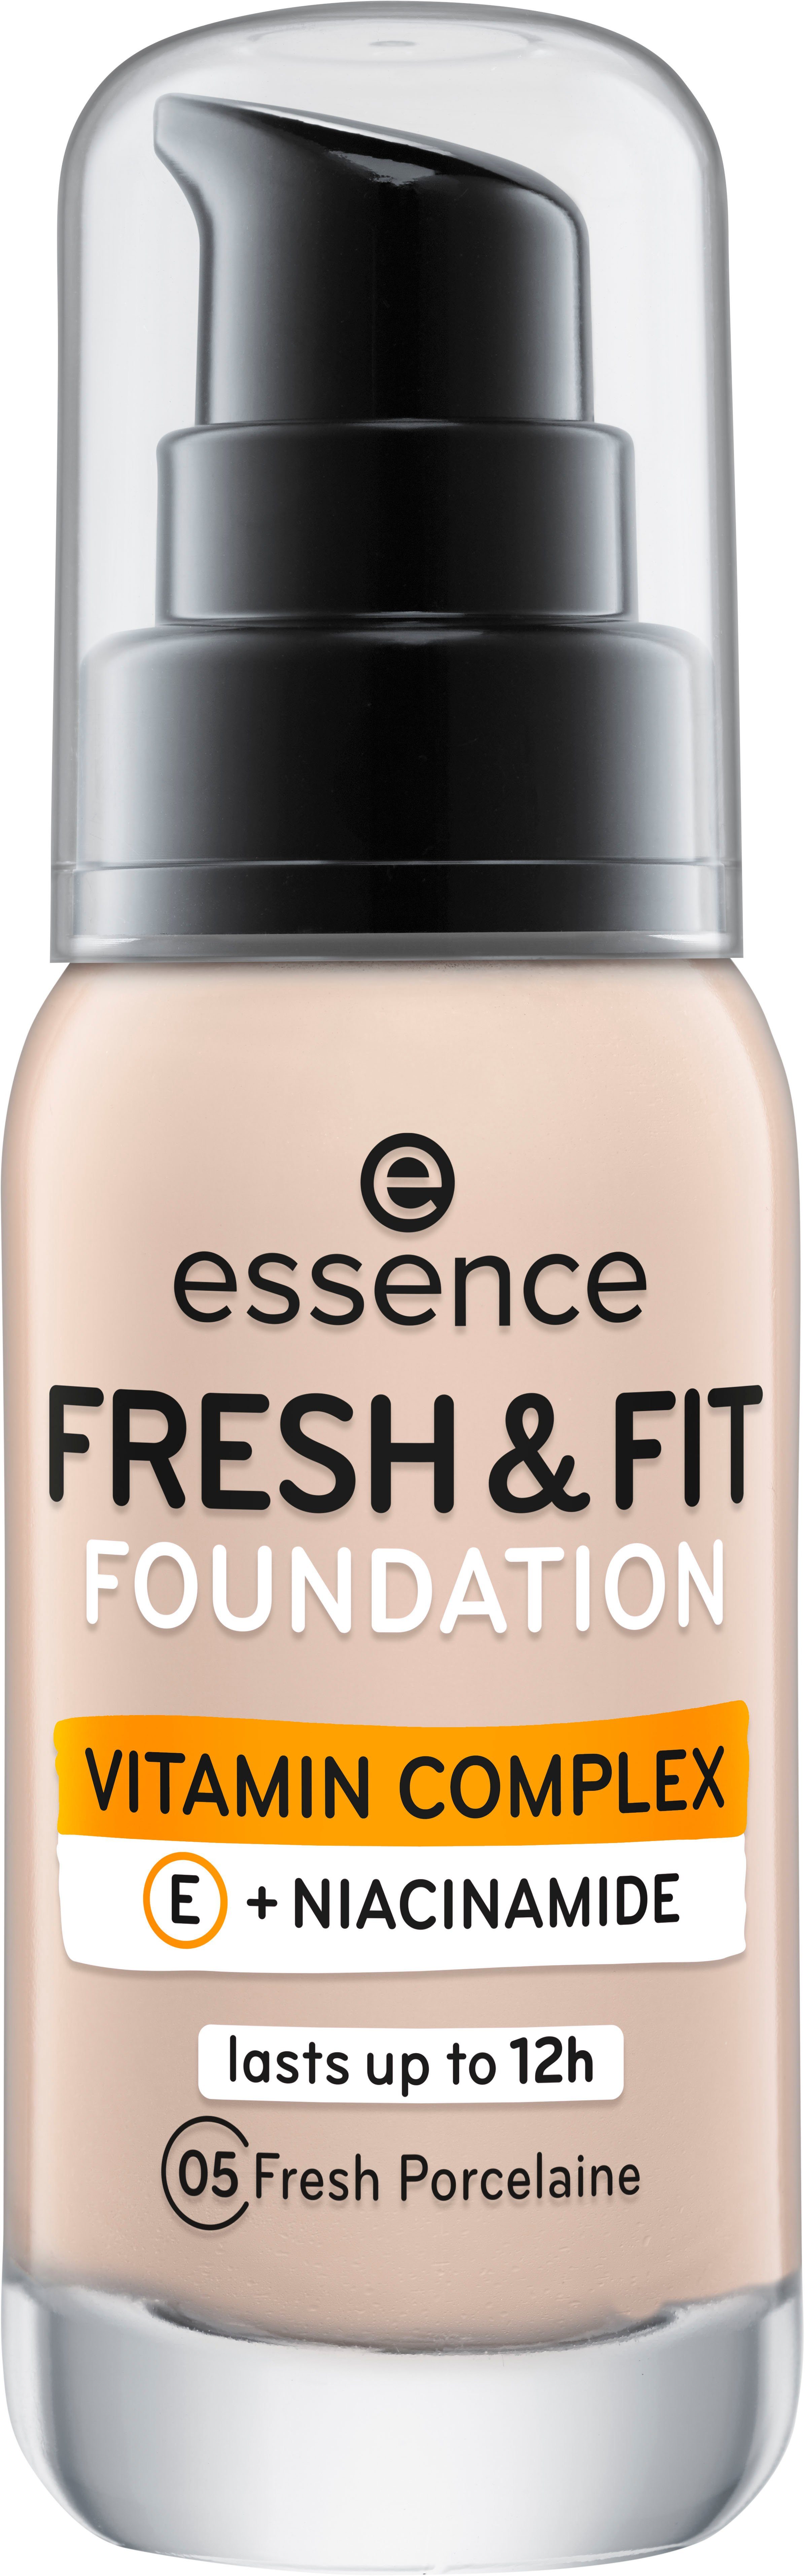 Essence fresh porcelaine FIT FOUNDATION, & 3-tlg. Foundation FRESH